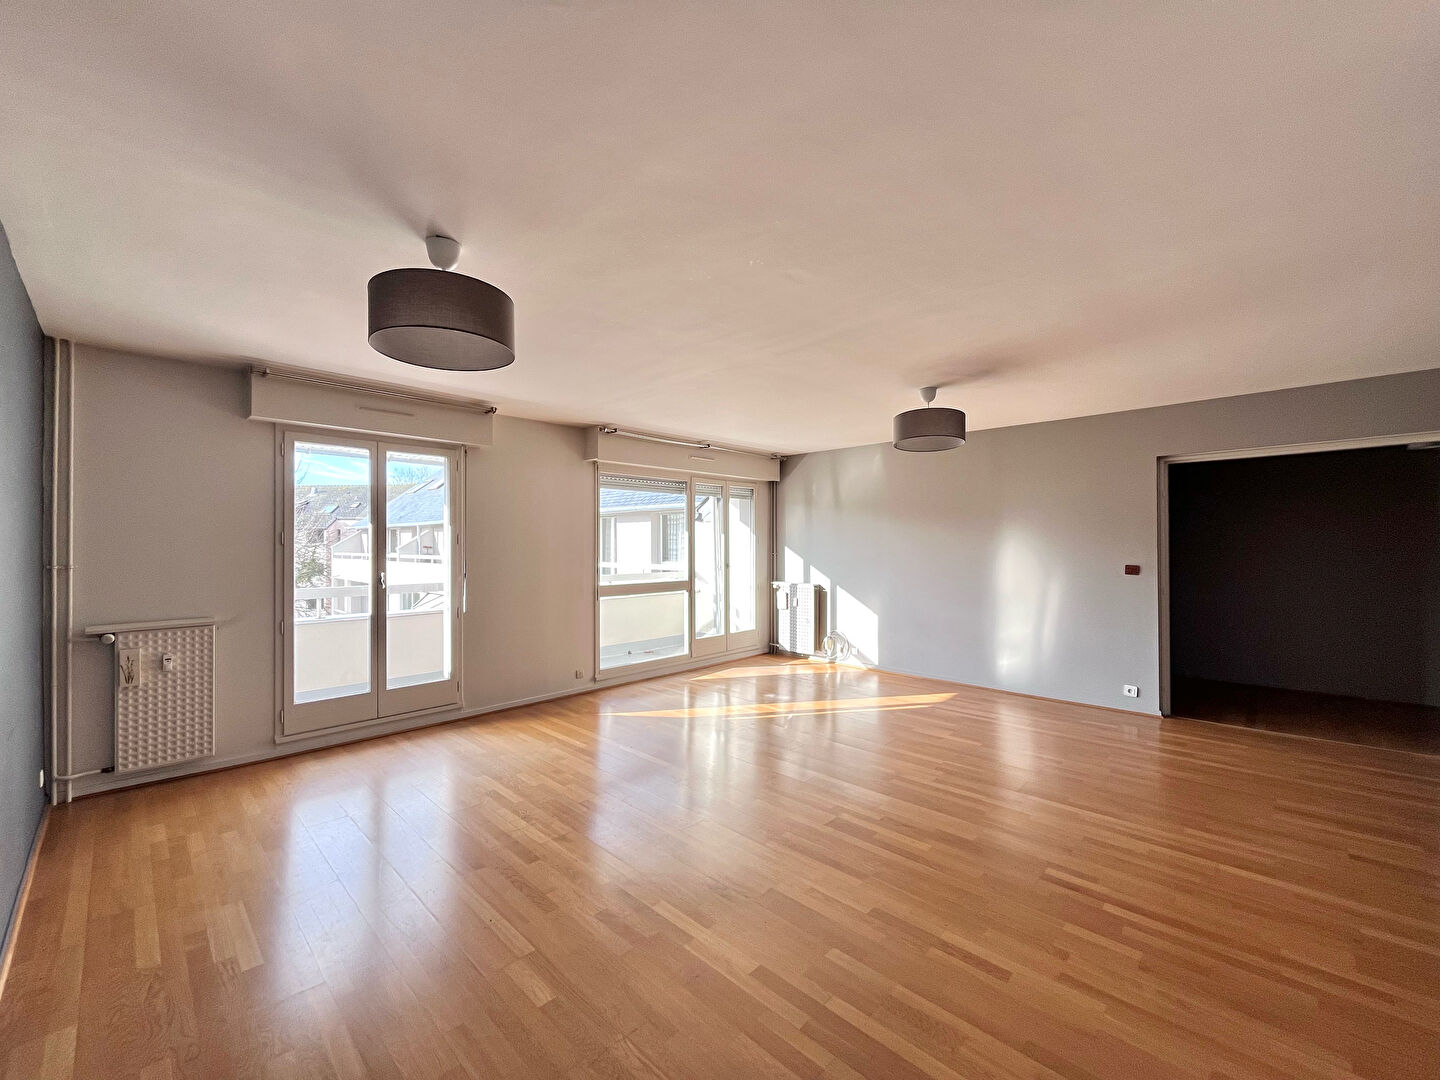 Appartement 5 pièces - 116 m² environ - 55375362b.jpg | Kermarrec Habitation